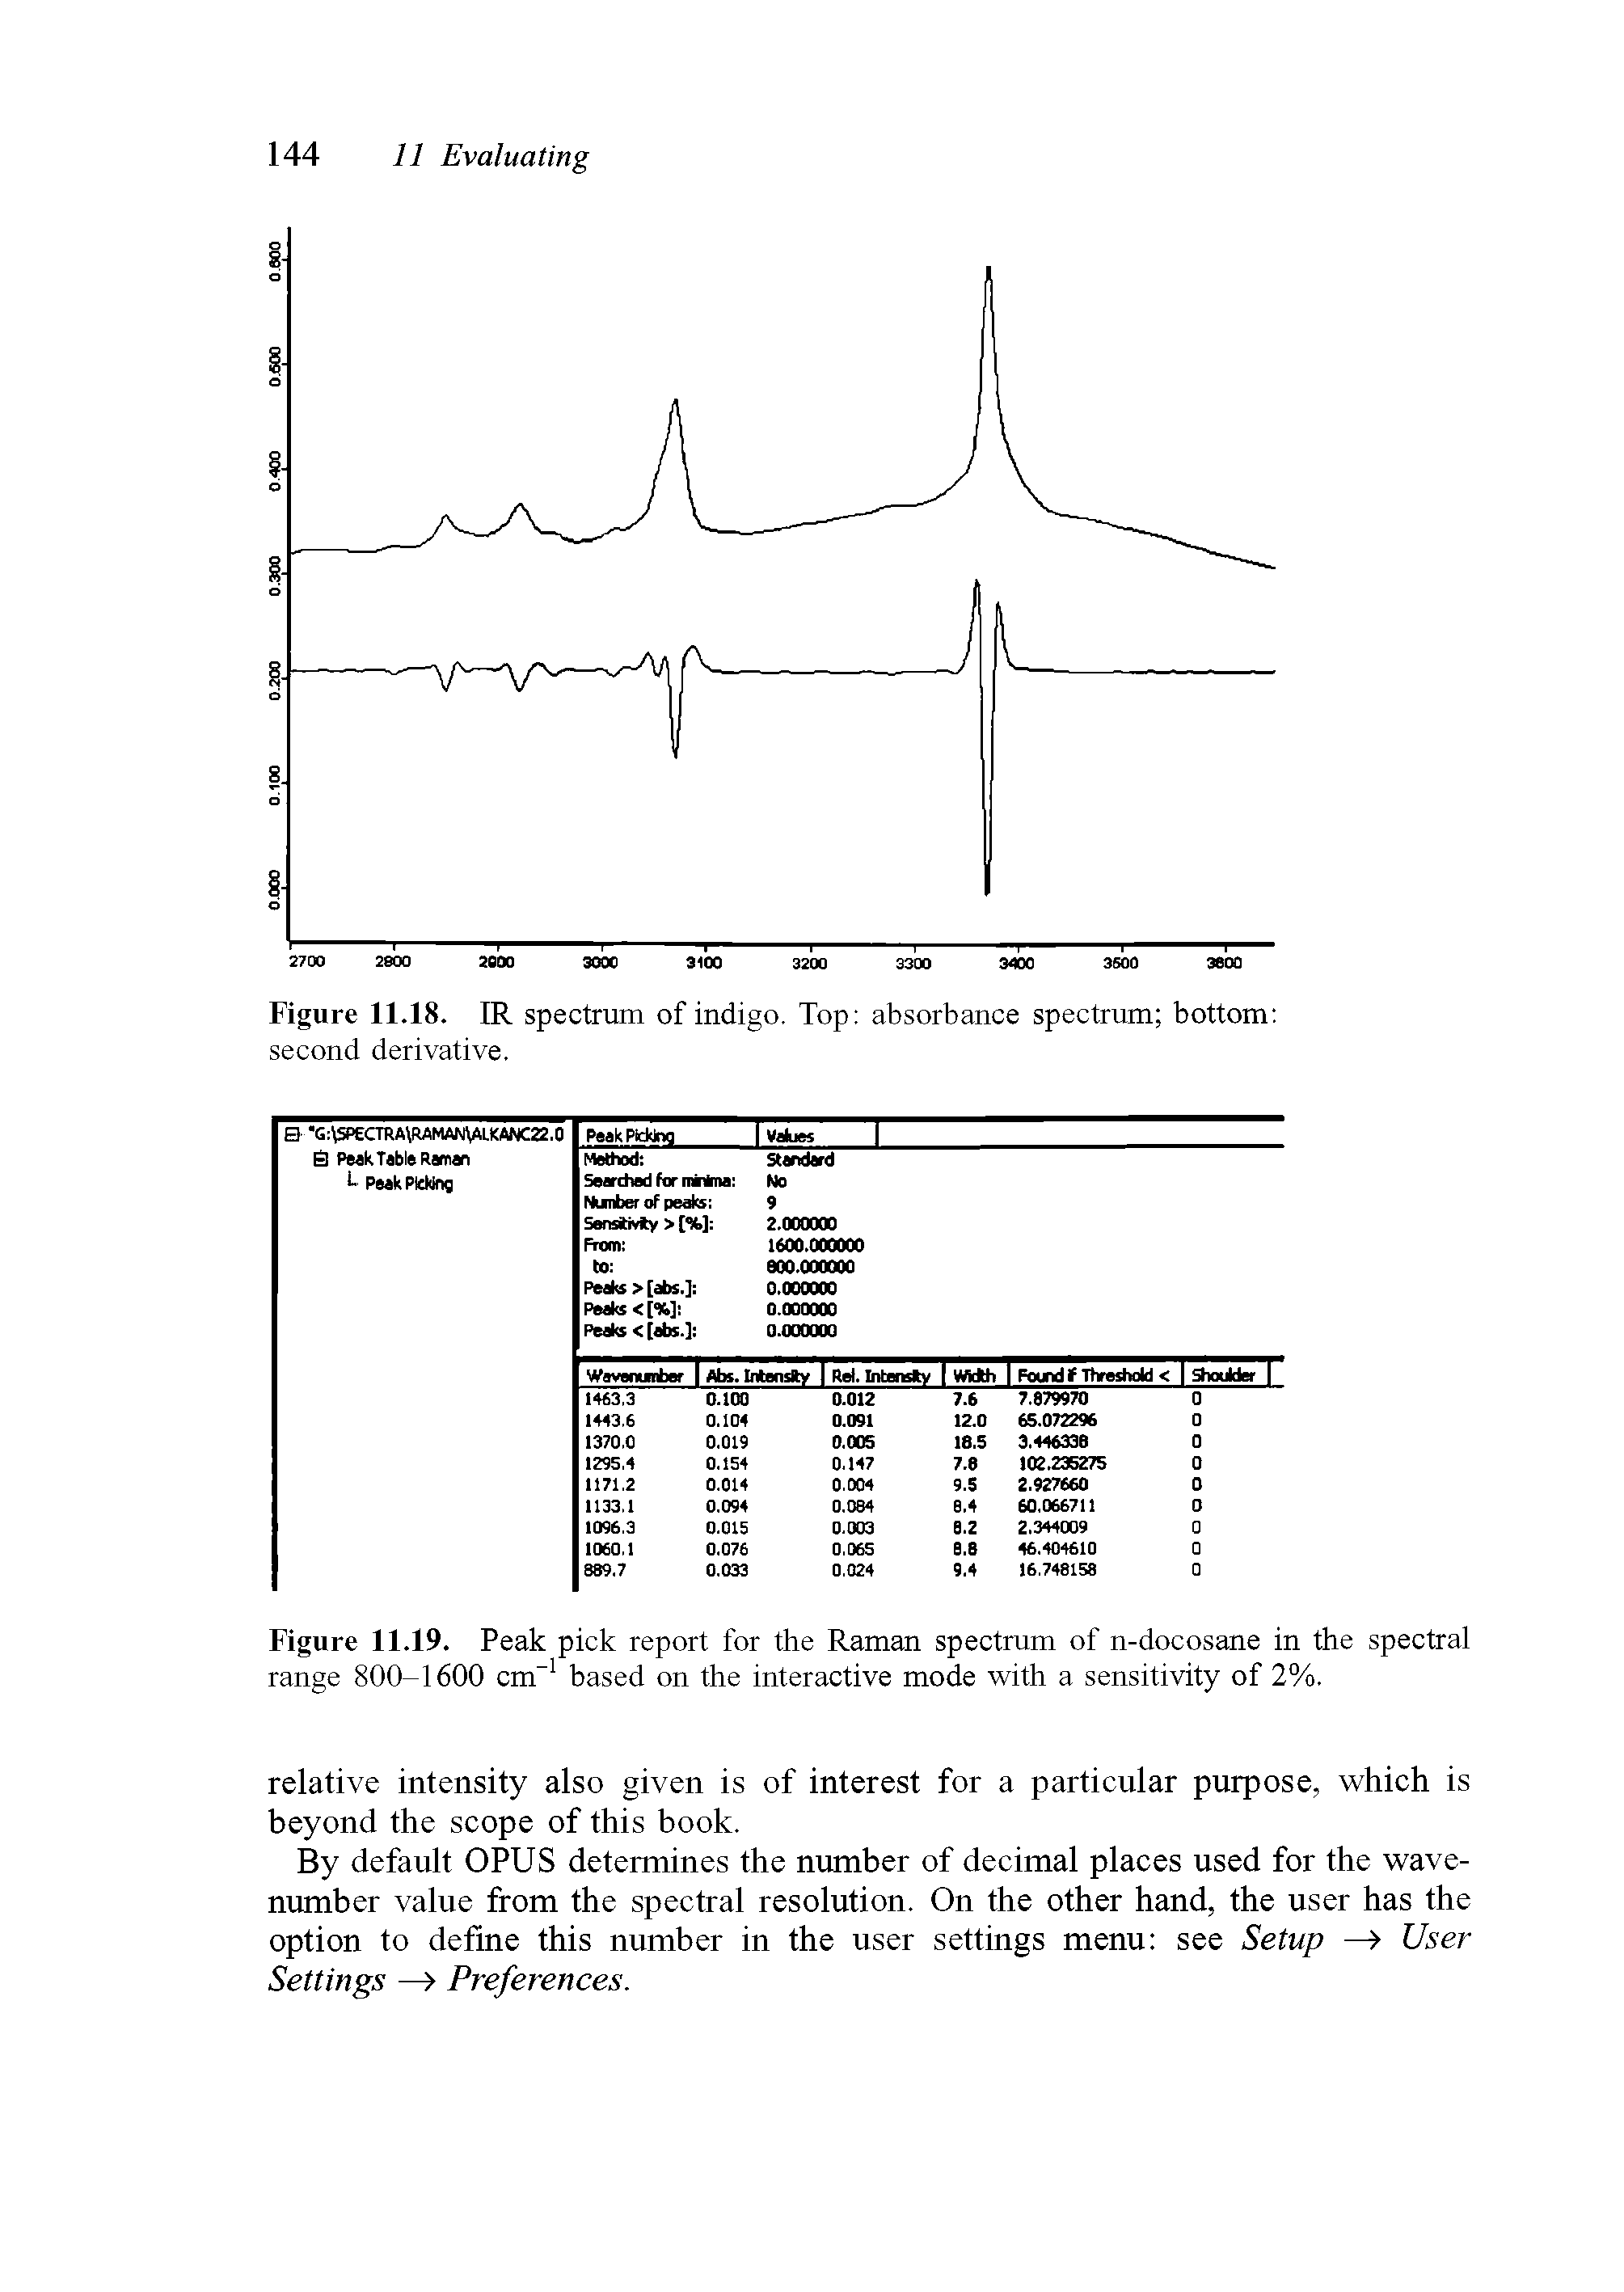 Figure 11.18. IR spectrum of indigo. Top absorbance spectrum bottom second derivative.